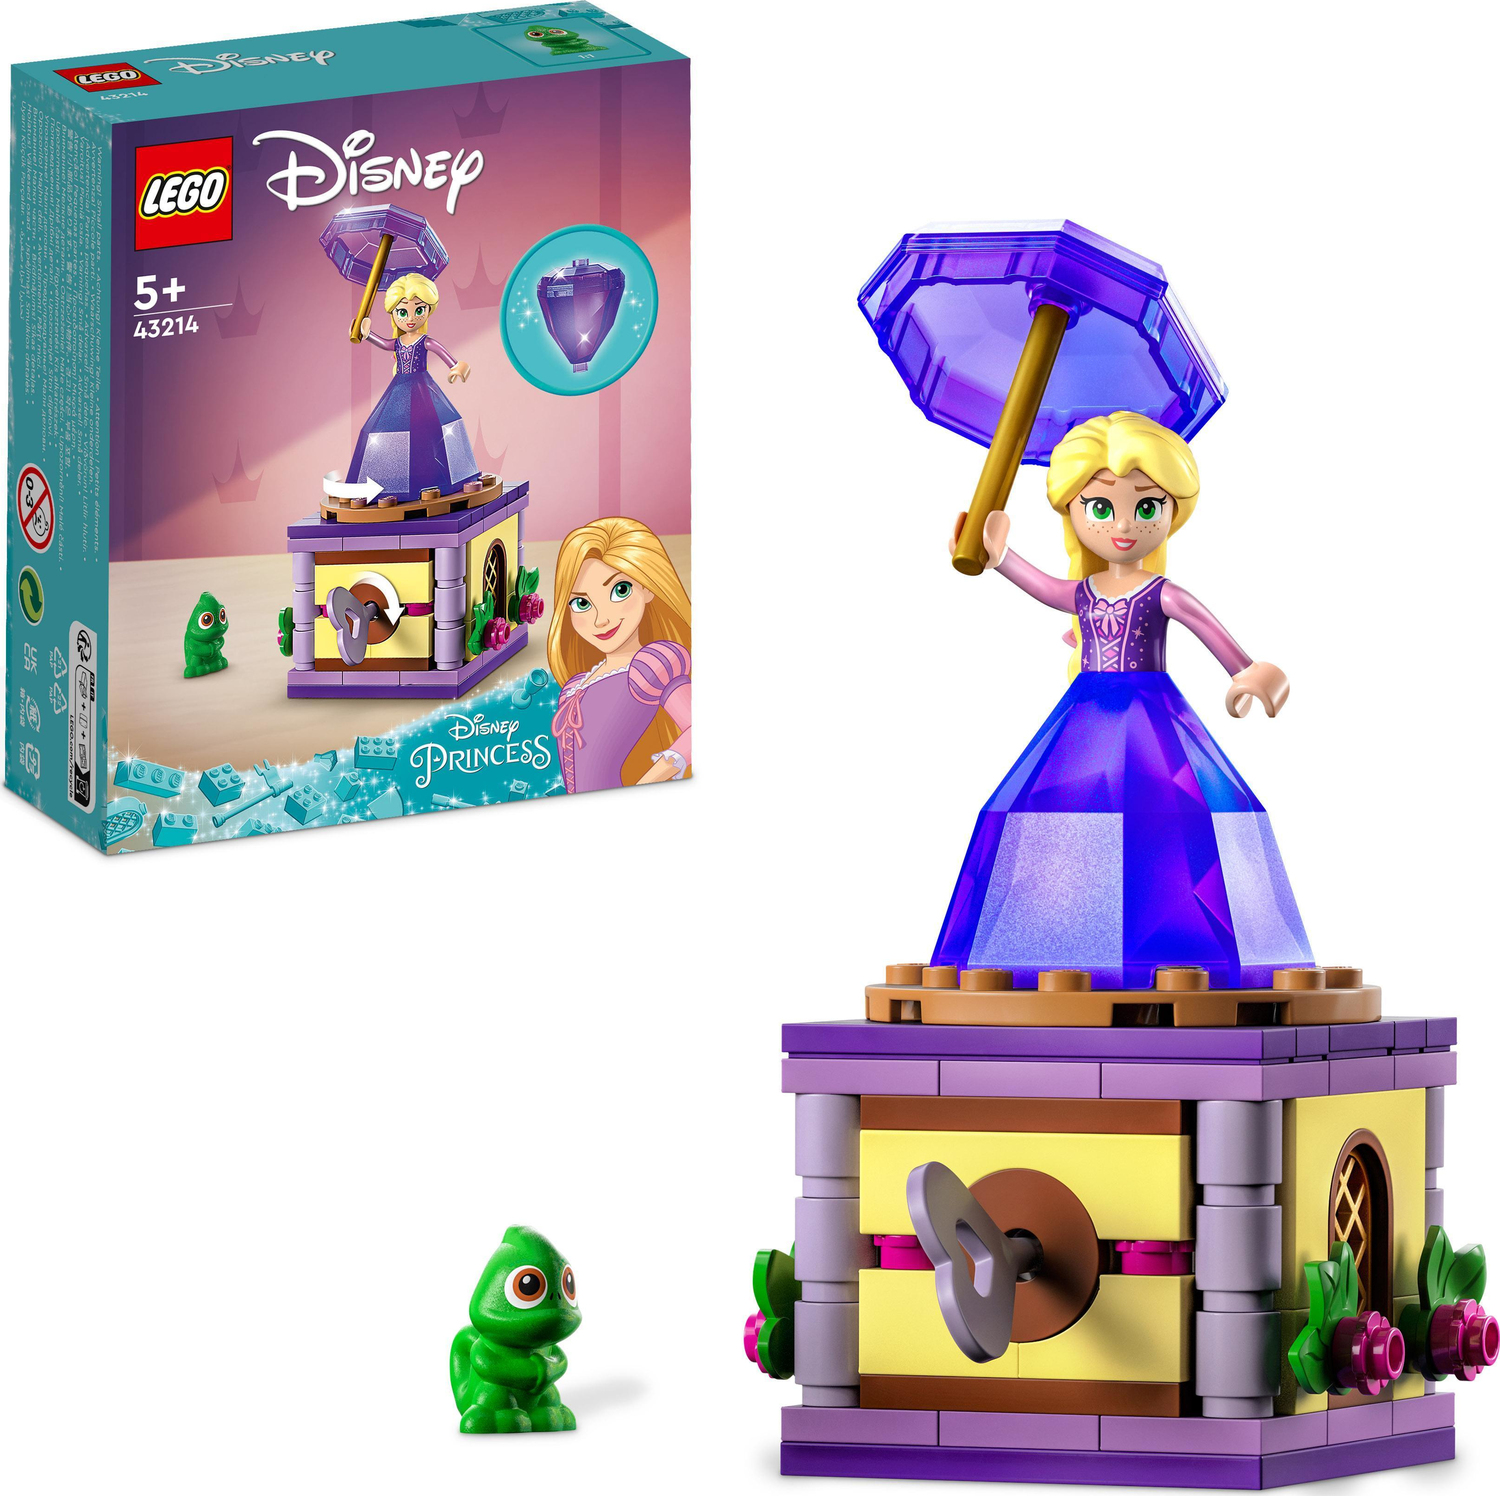 LEGO Disney Princess Sets & Toys